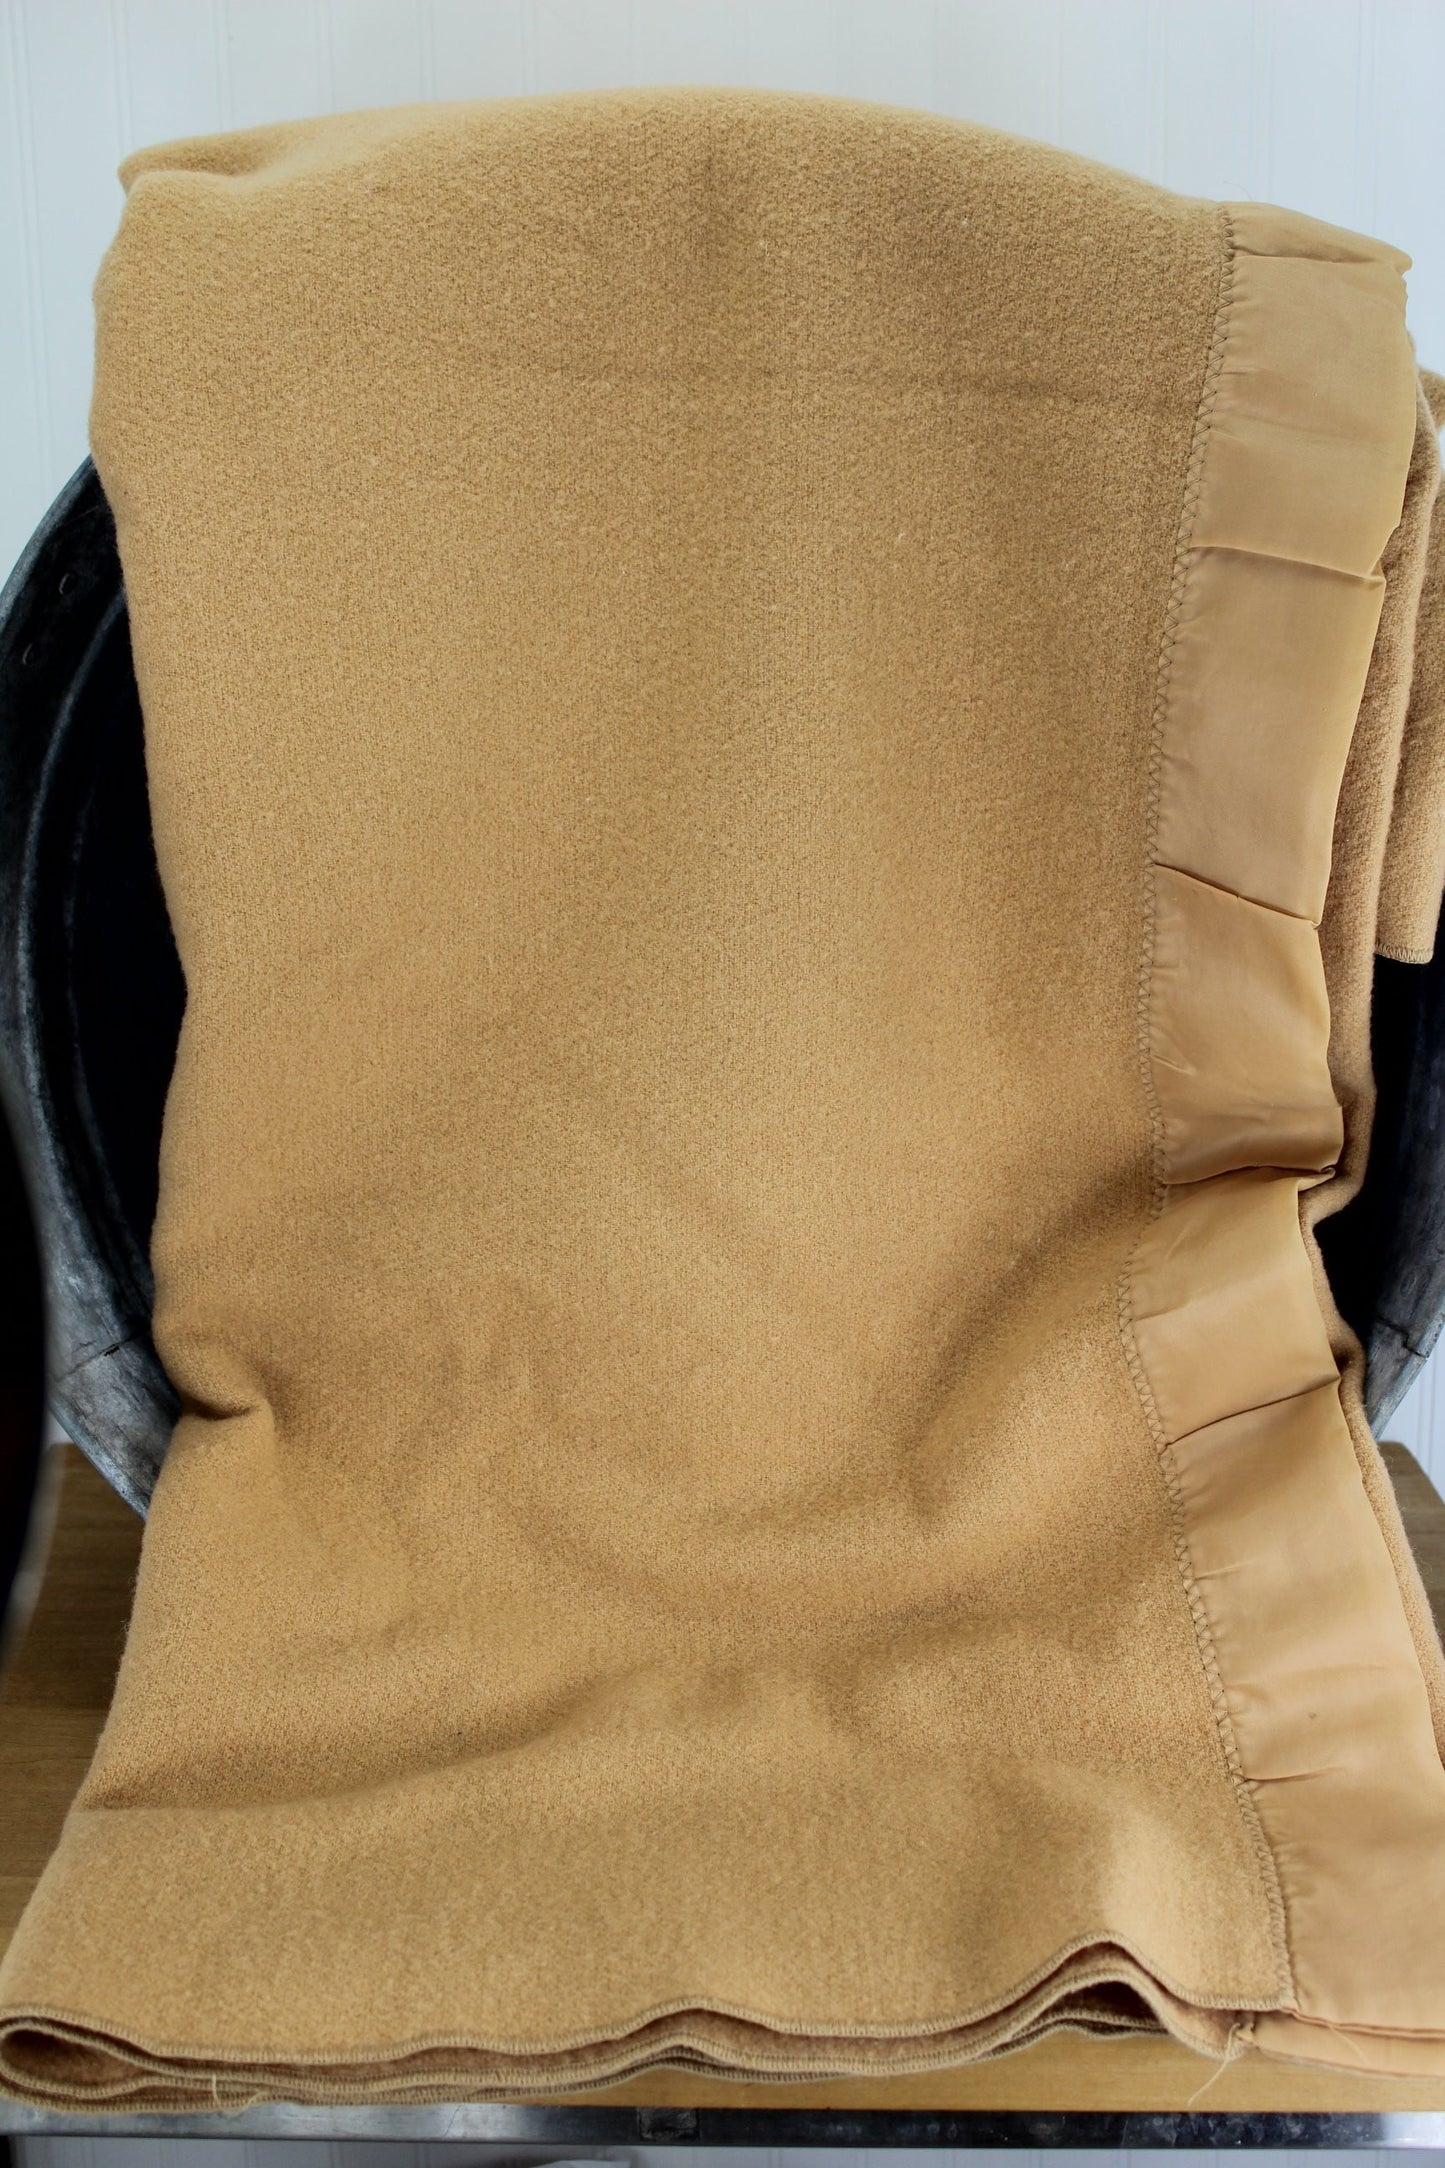 Faribo Washable Wool Blanket ~ Caramel Tan ~ 65" X 83" USA wide binding